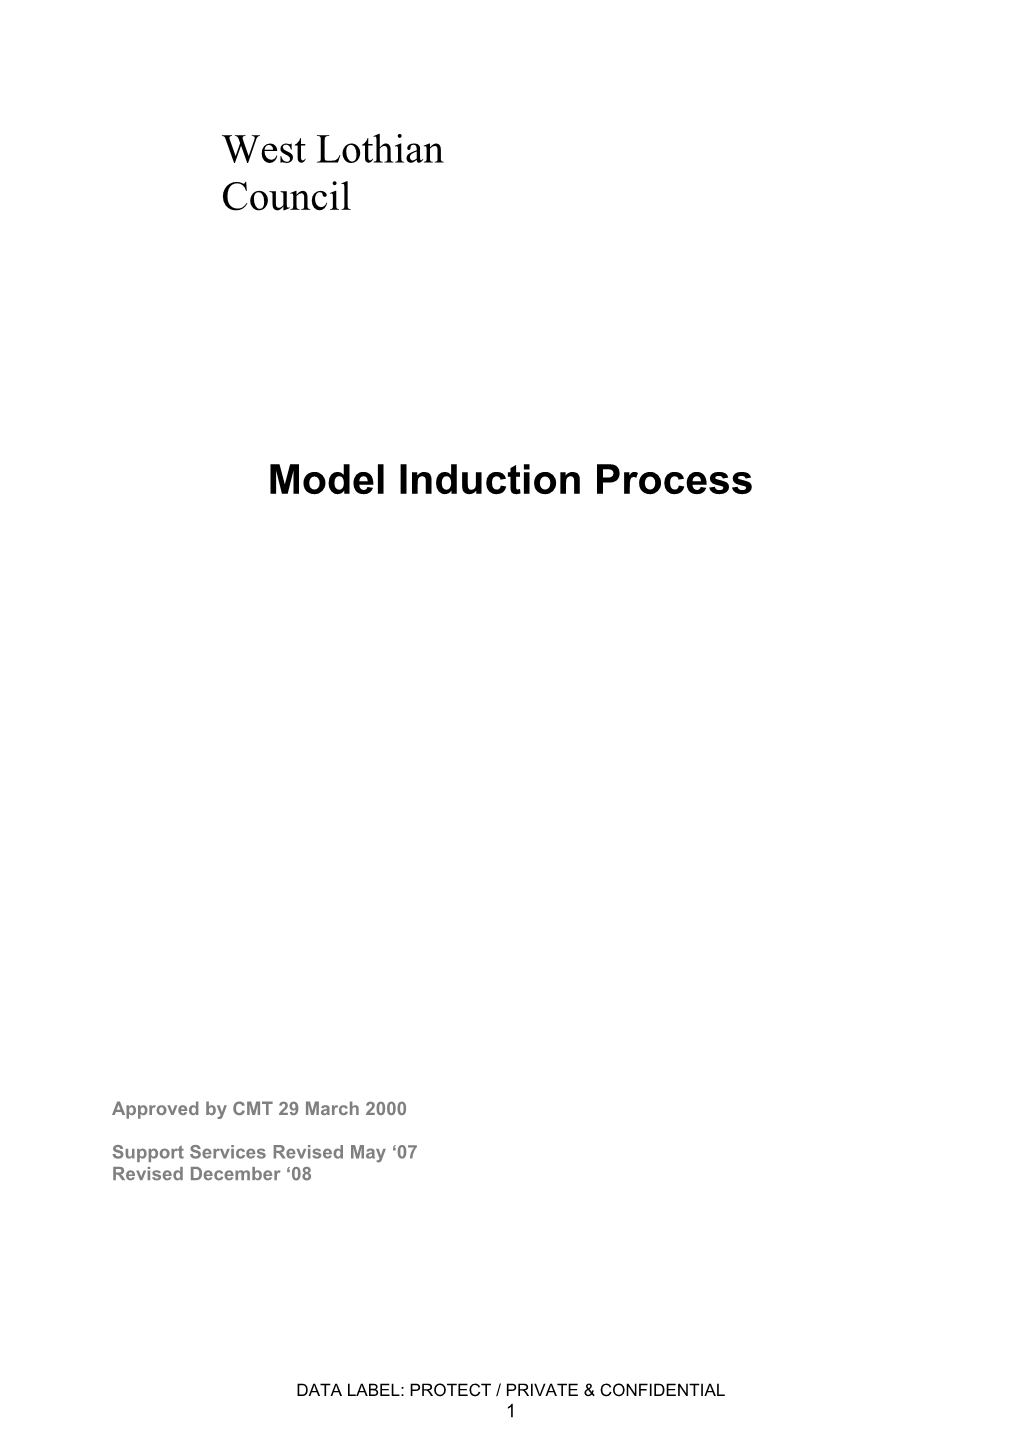 Model Induction Process (Revised Dec '08)